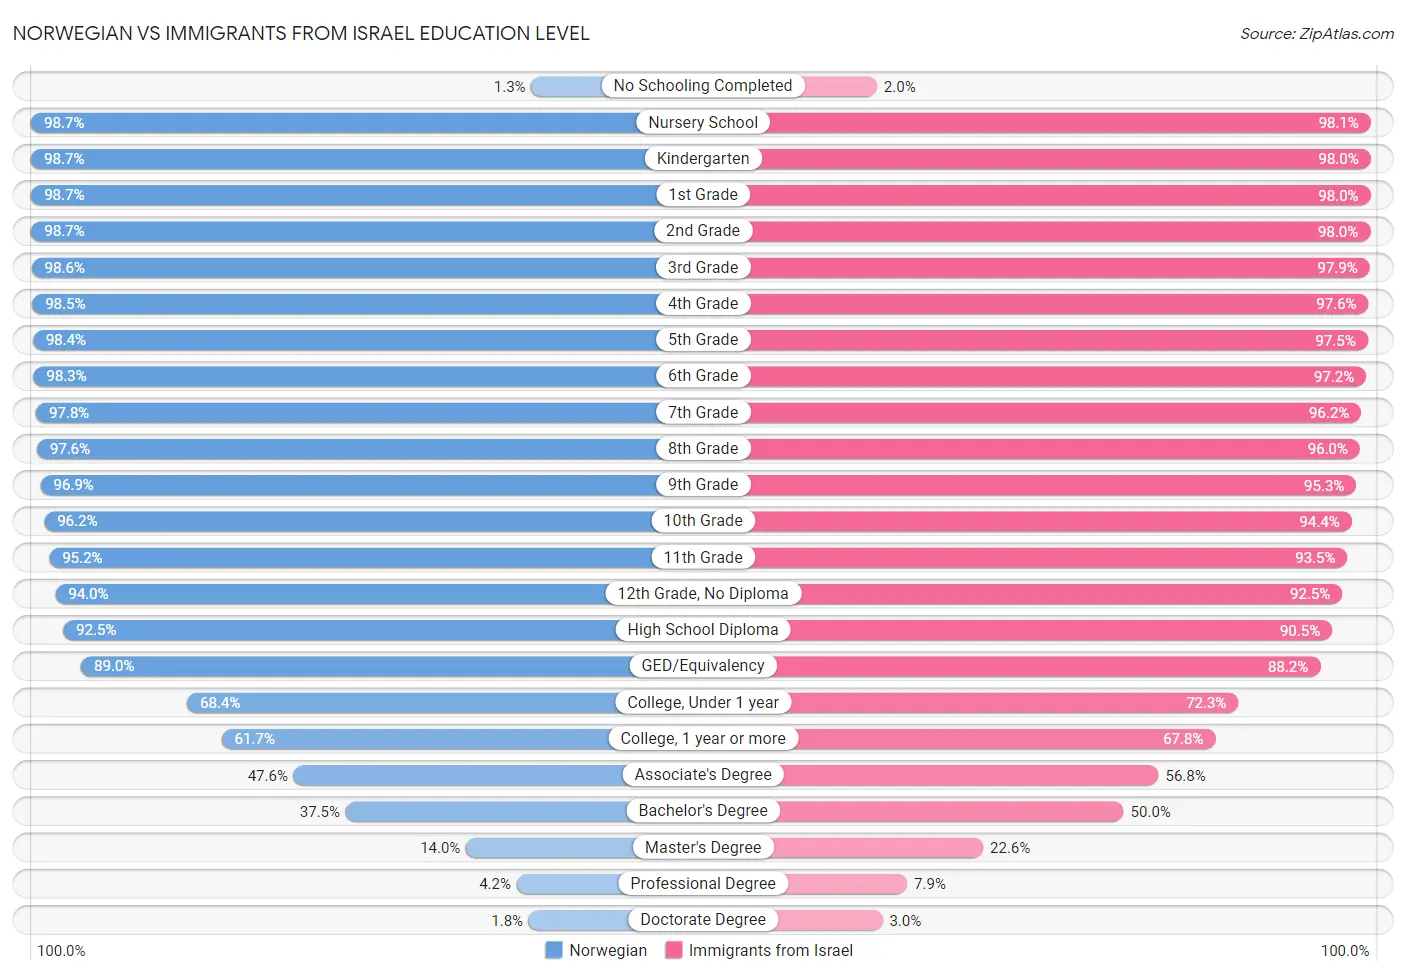 Norwegian vs Immigrants from Israel Education Level